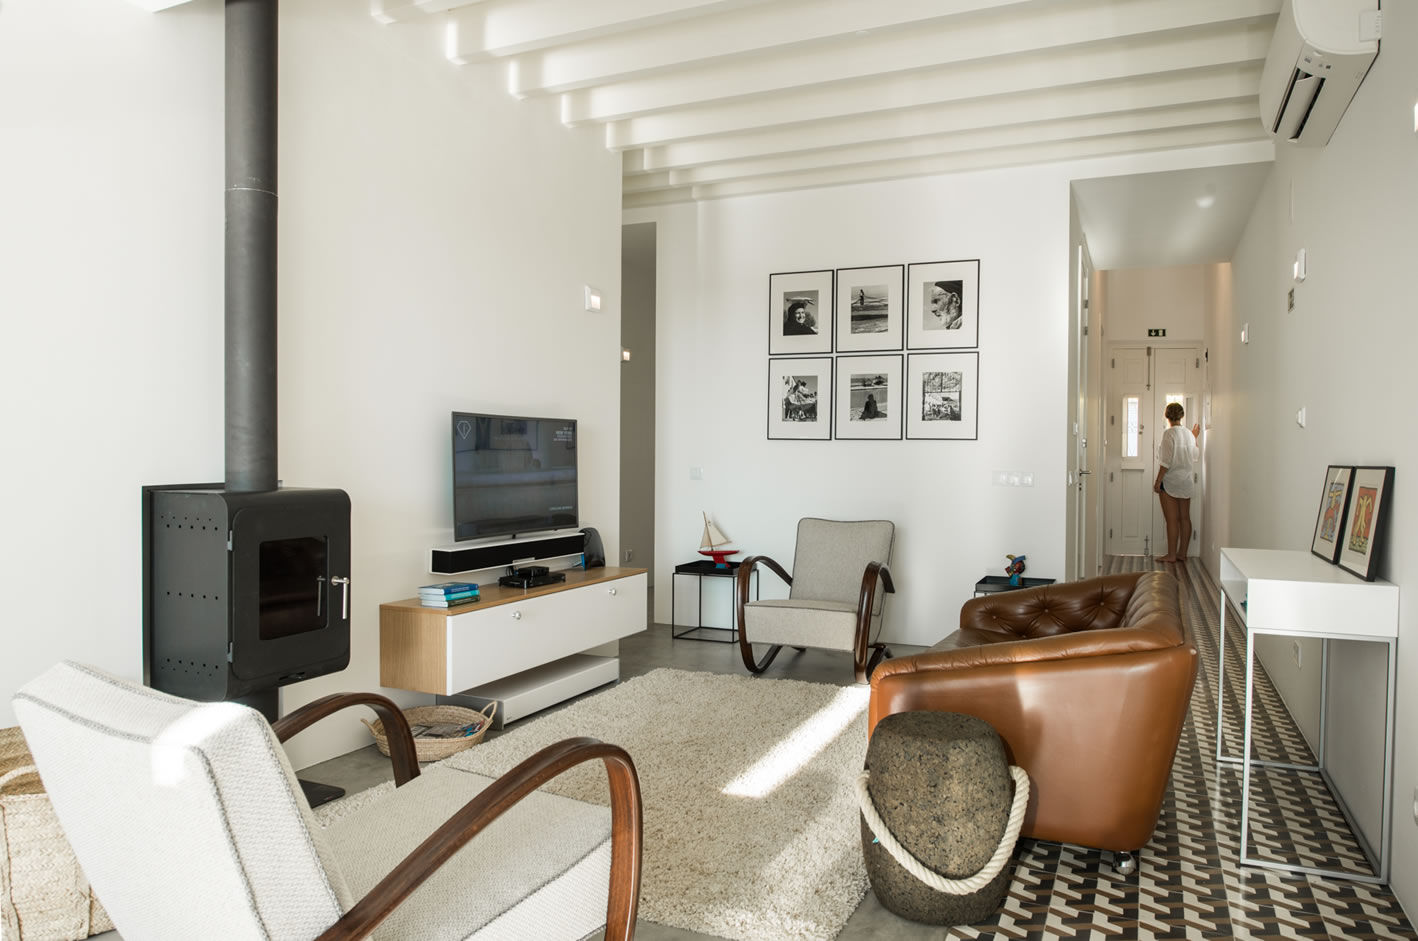 Livingroom StudioArte Soggiorno minimalista living,vintage furniture,tiles